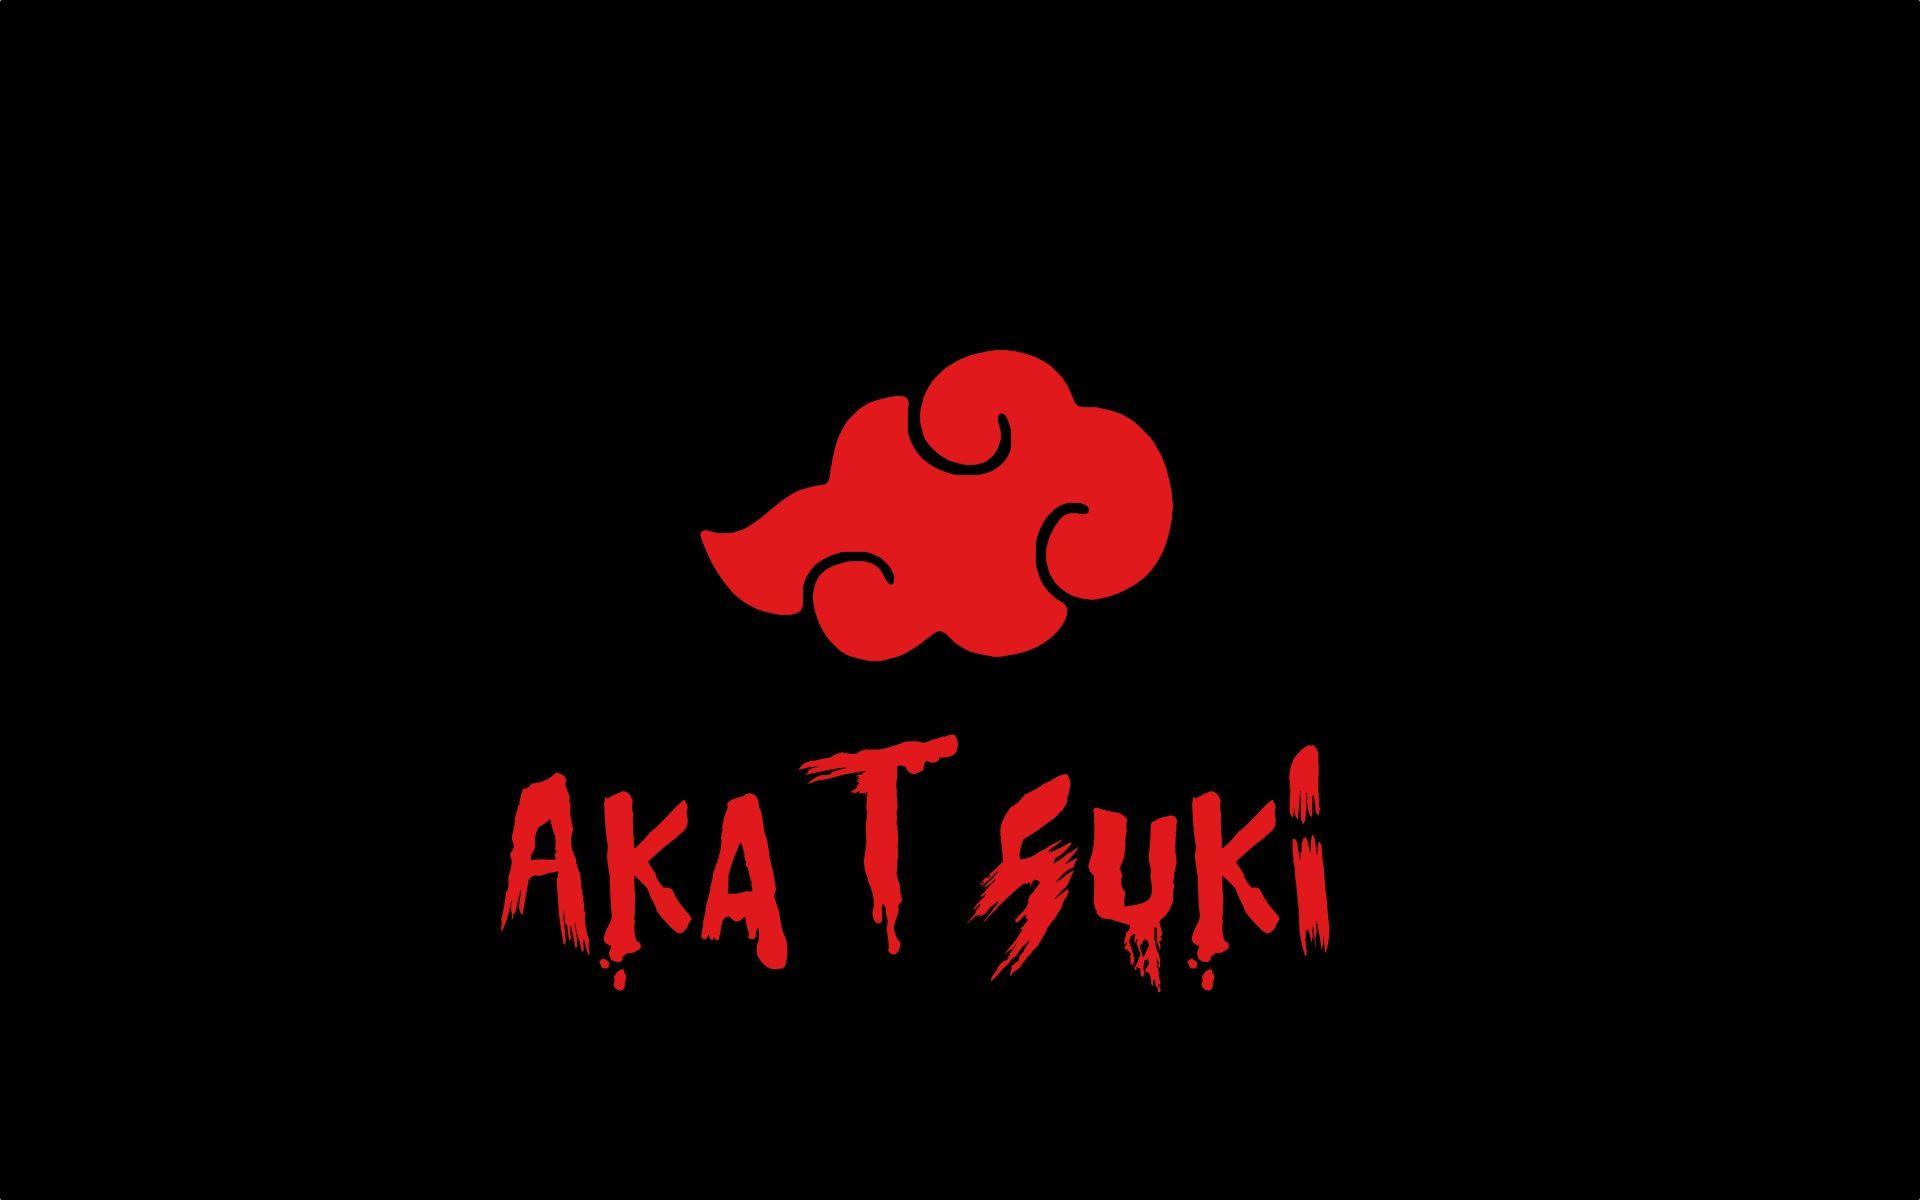 Akatsuki Wallpapers - Top Free Akatsuki Backgrounds 